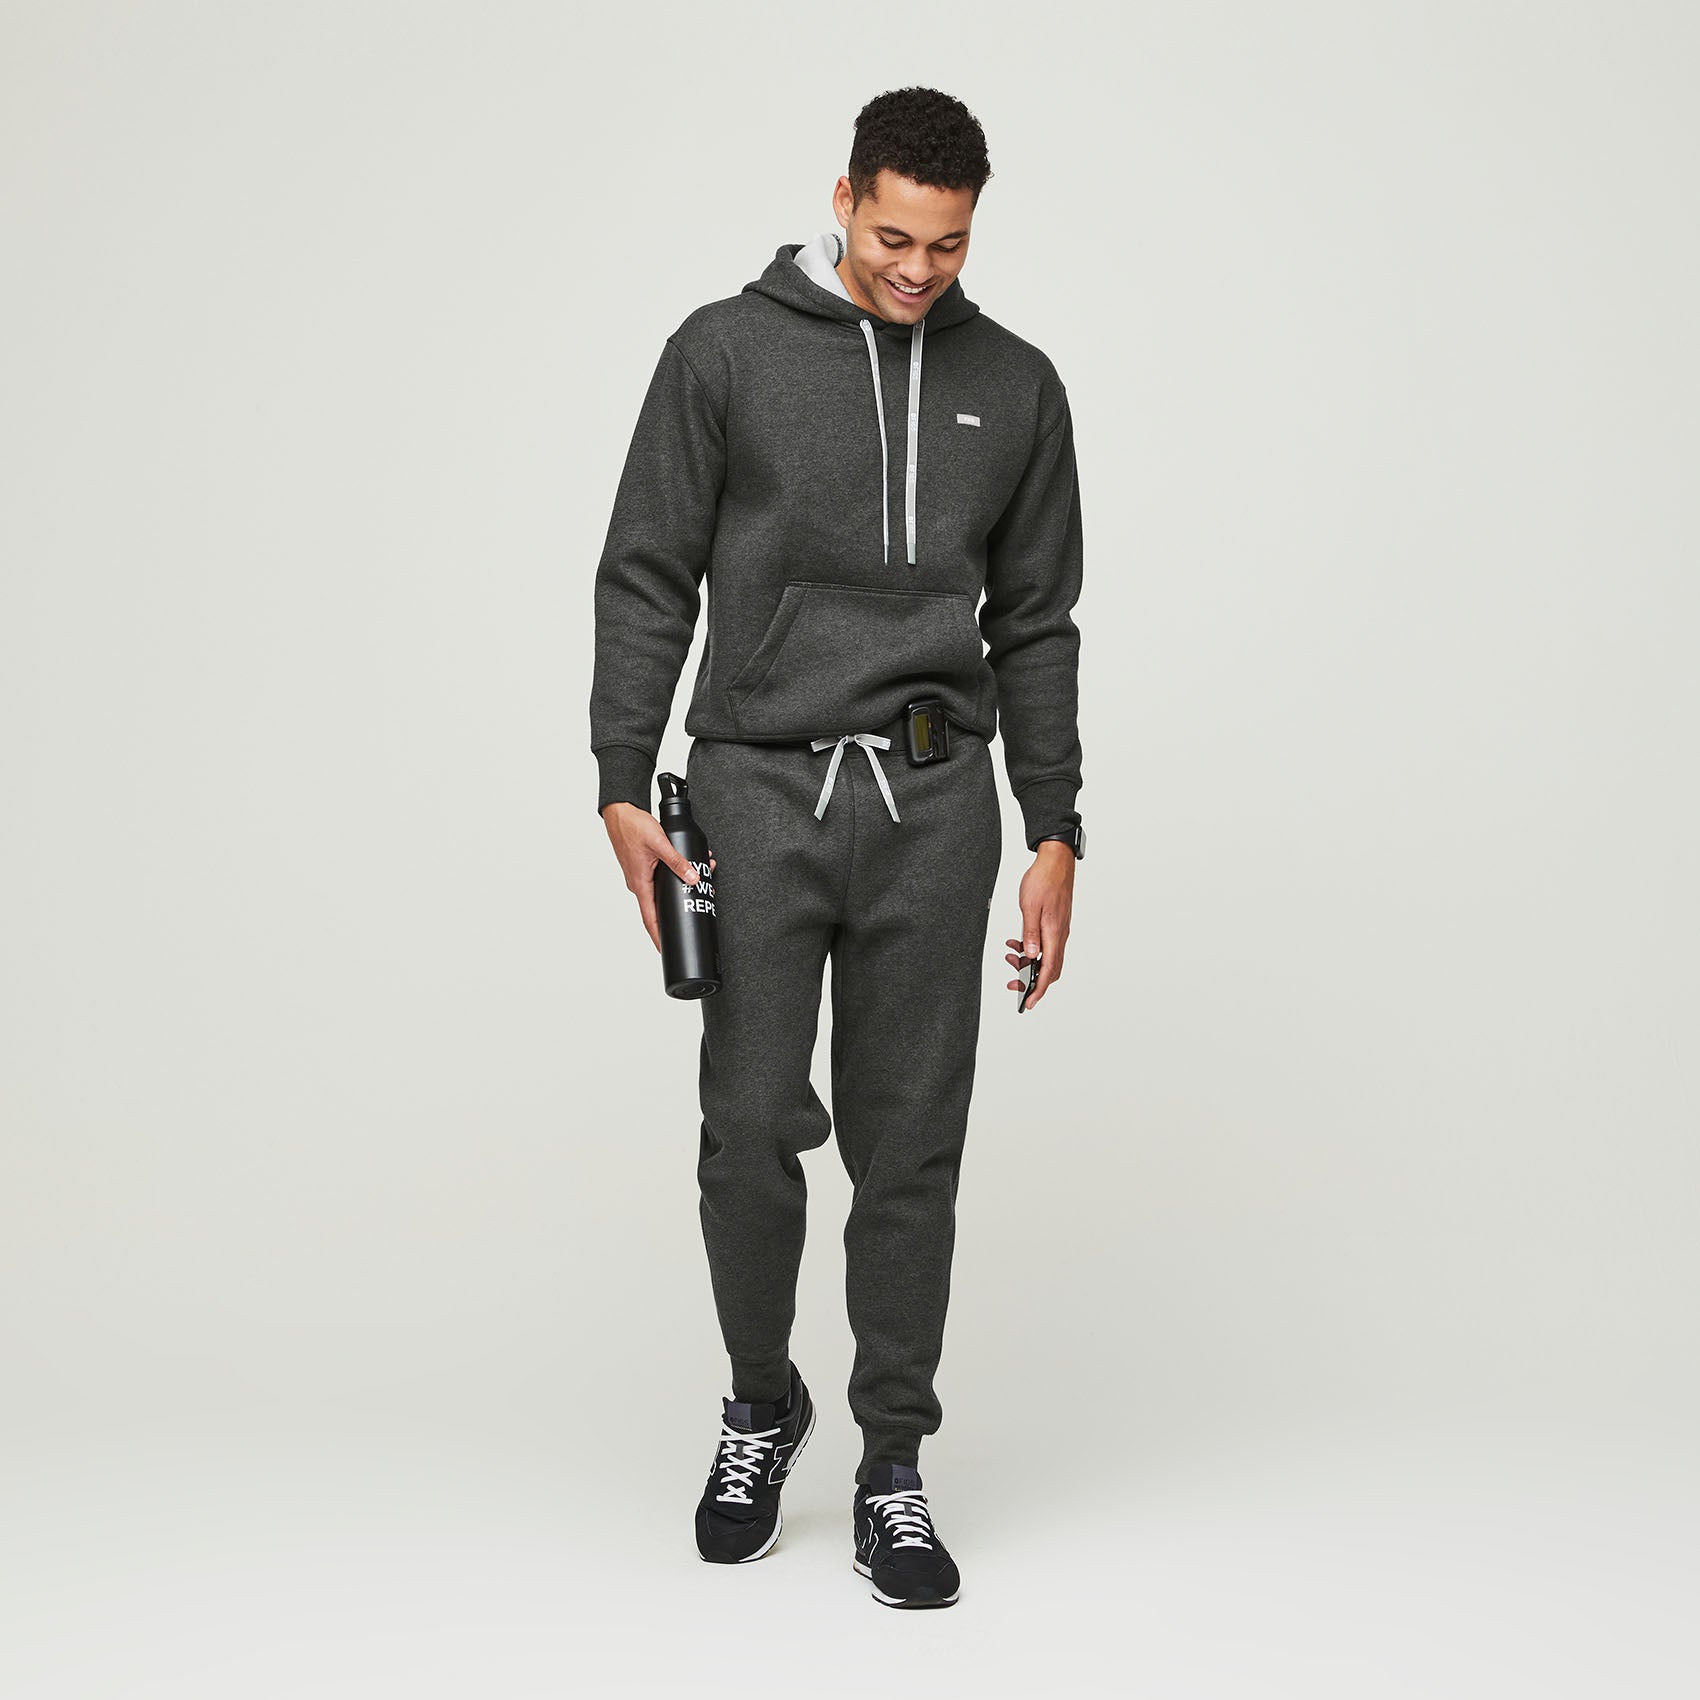 https://cdn.shopify.com/s/files/1/0139/8942/products/Men-Off-Shift-Loungewear-Sweatshirt-HTR-charcoal-2.jpg?v=1646100025